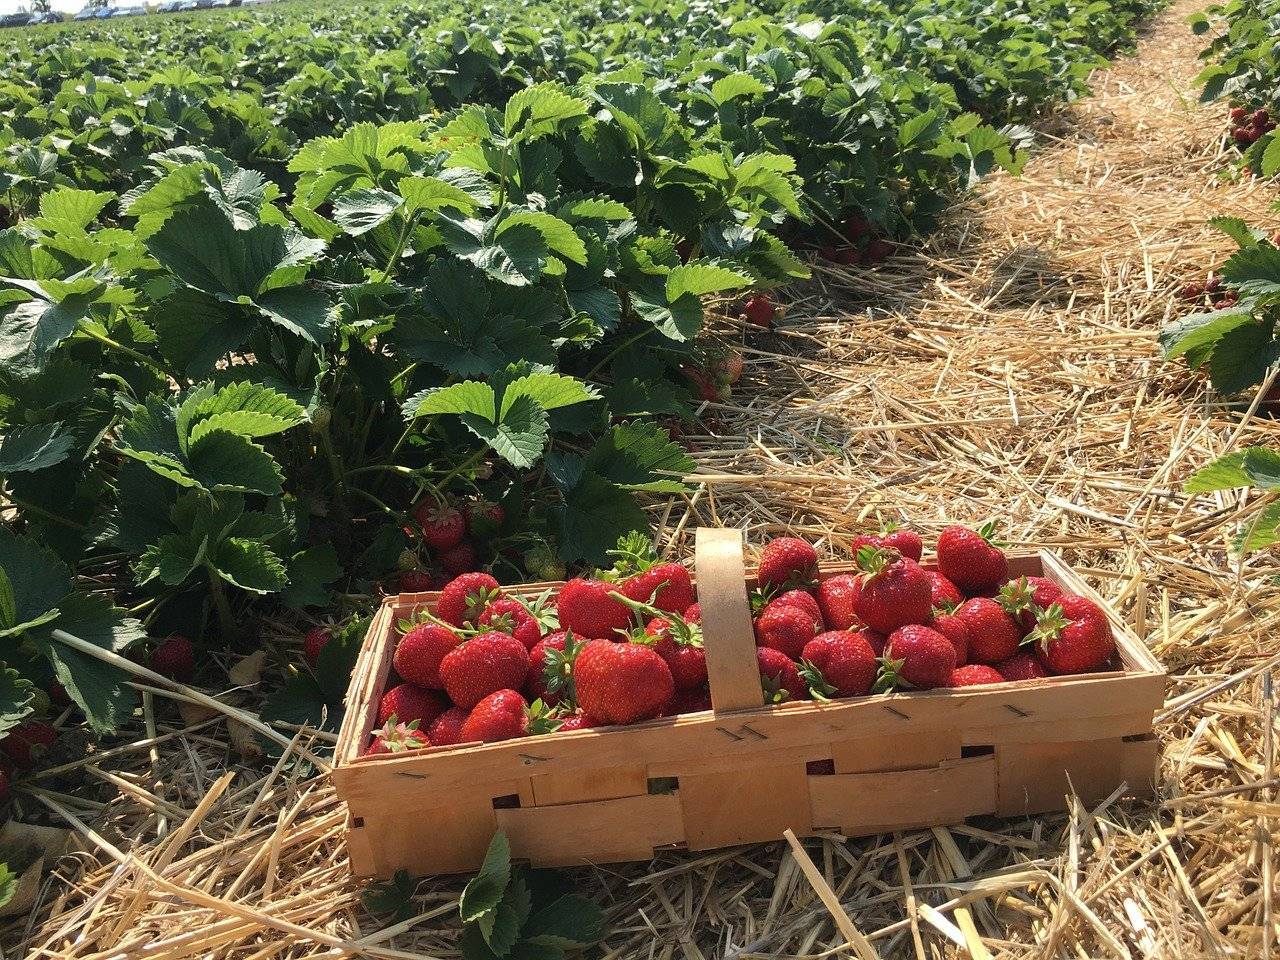 Технология выращивания клубники, посадка, подкормка, уход за ягодой
технология выращивания клубники, посадка, подкормка, уход за ягодой